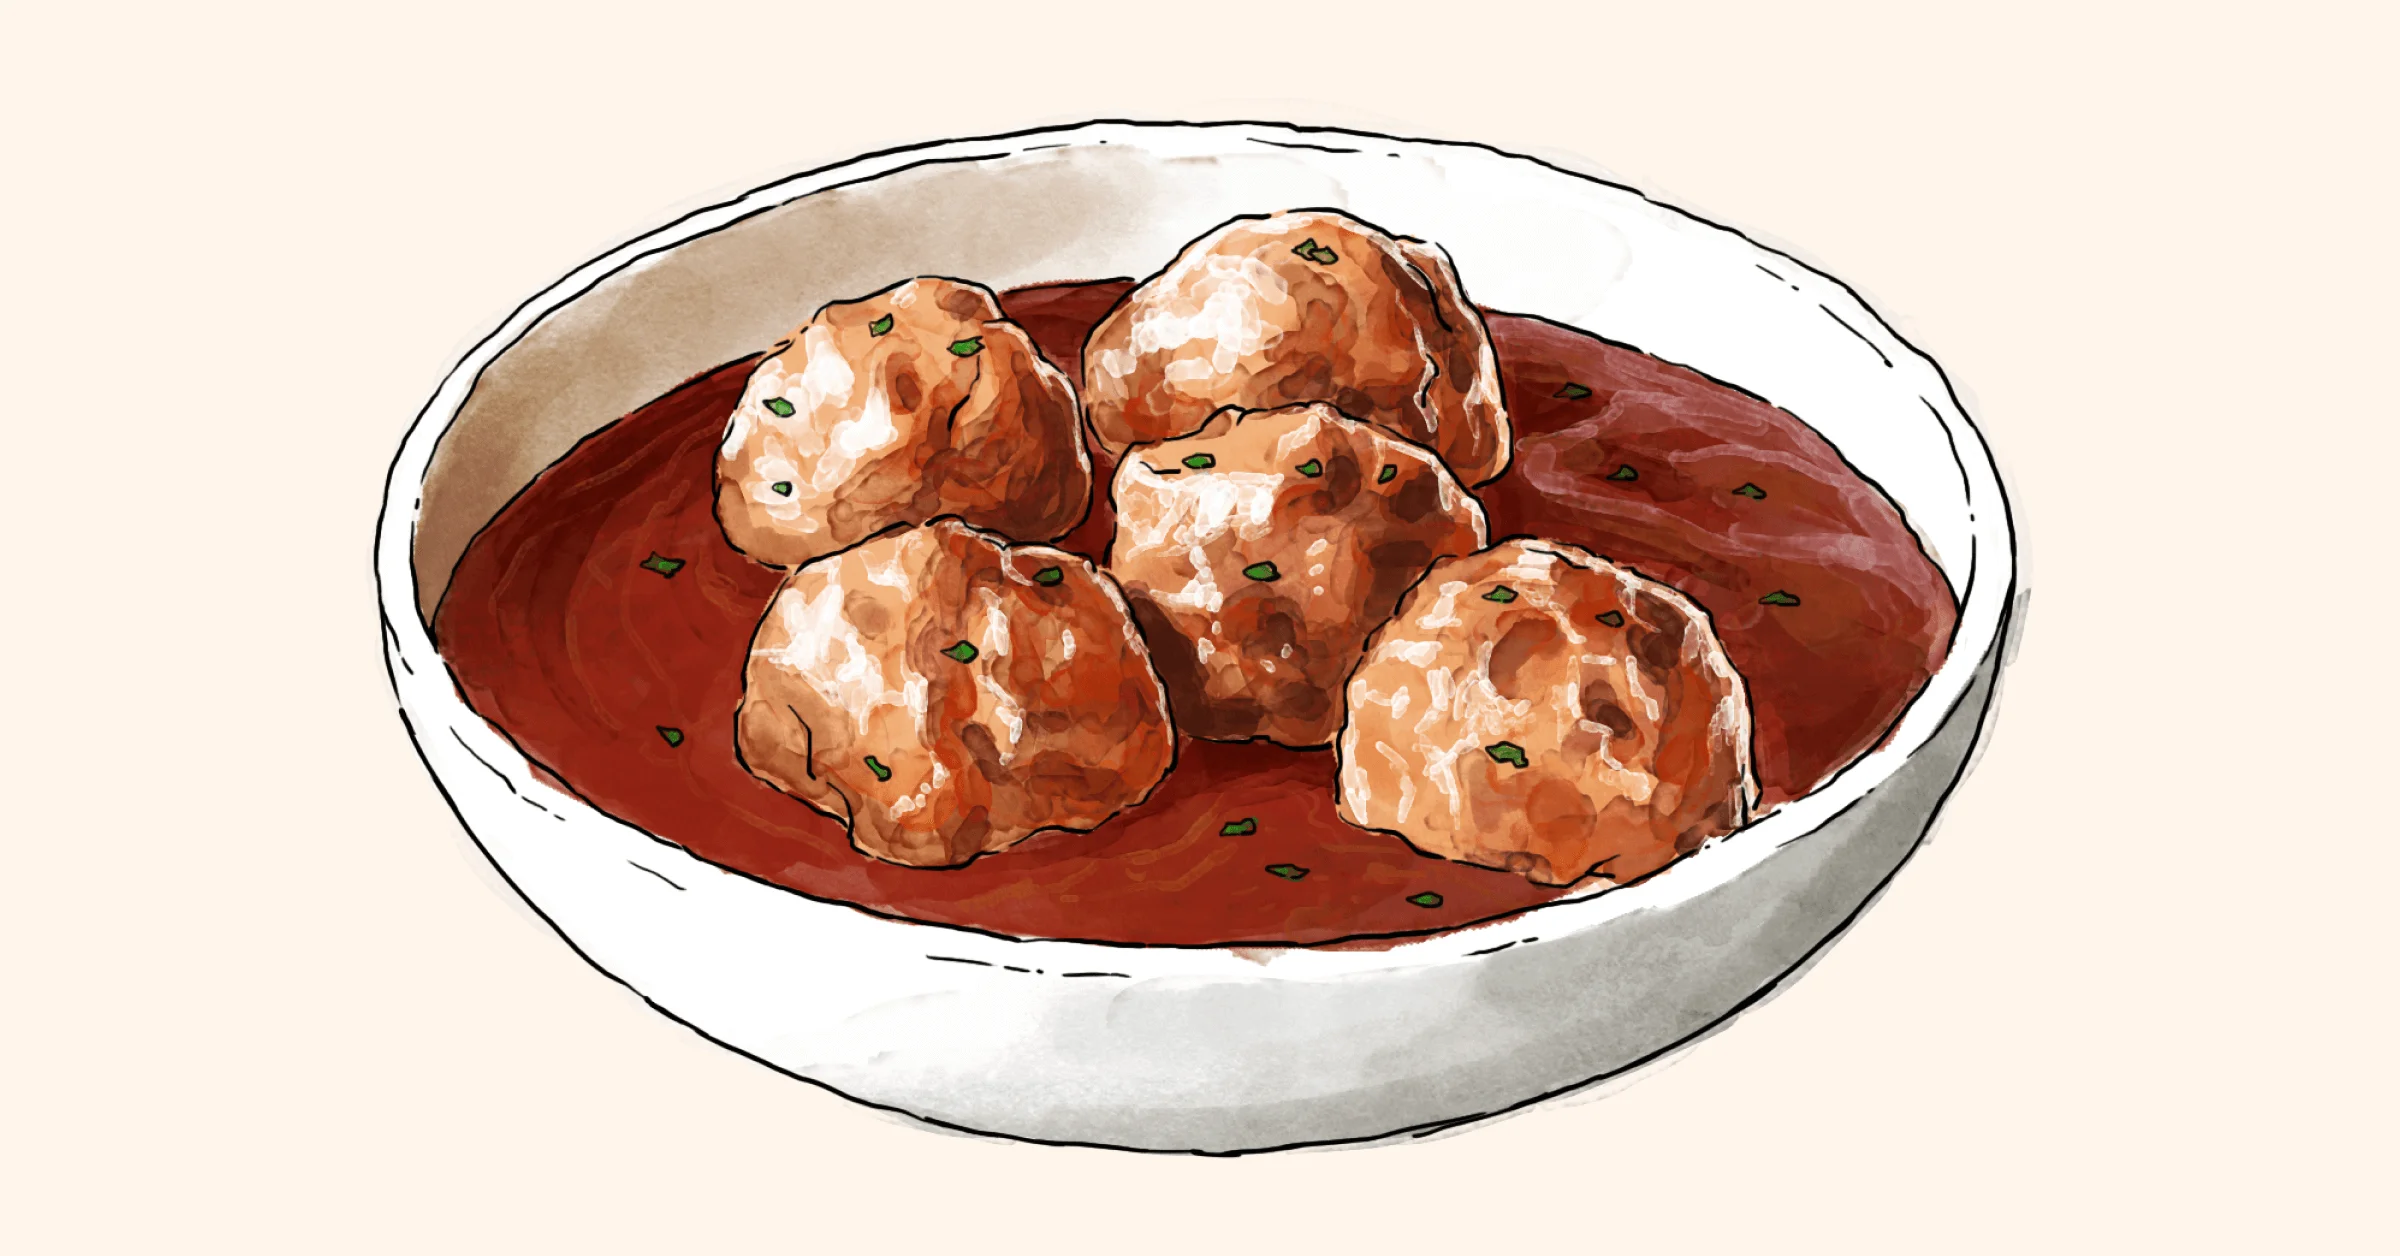 Illustration of Grandmas Posidentos Sauce with Meatballs